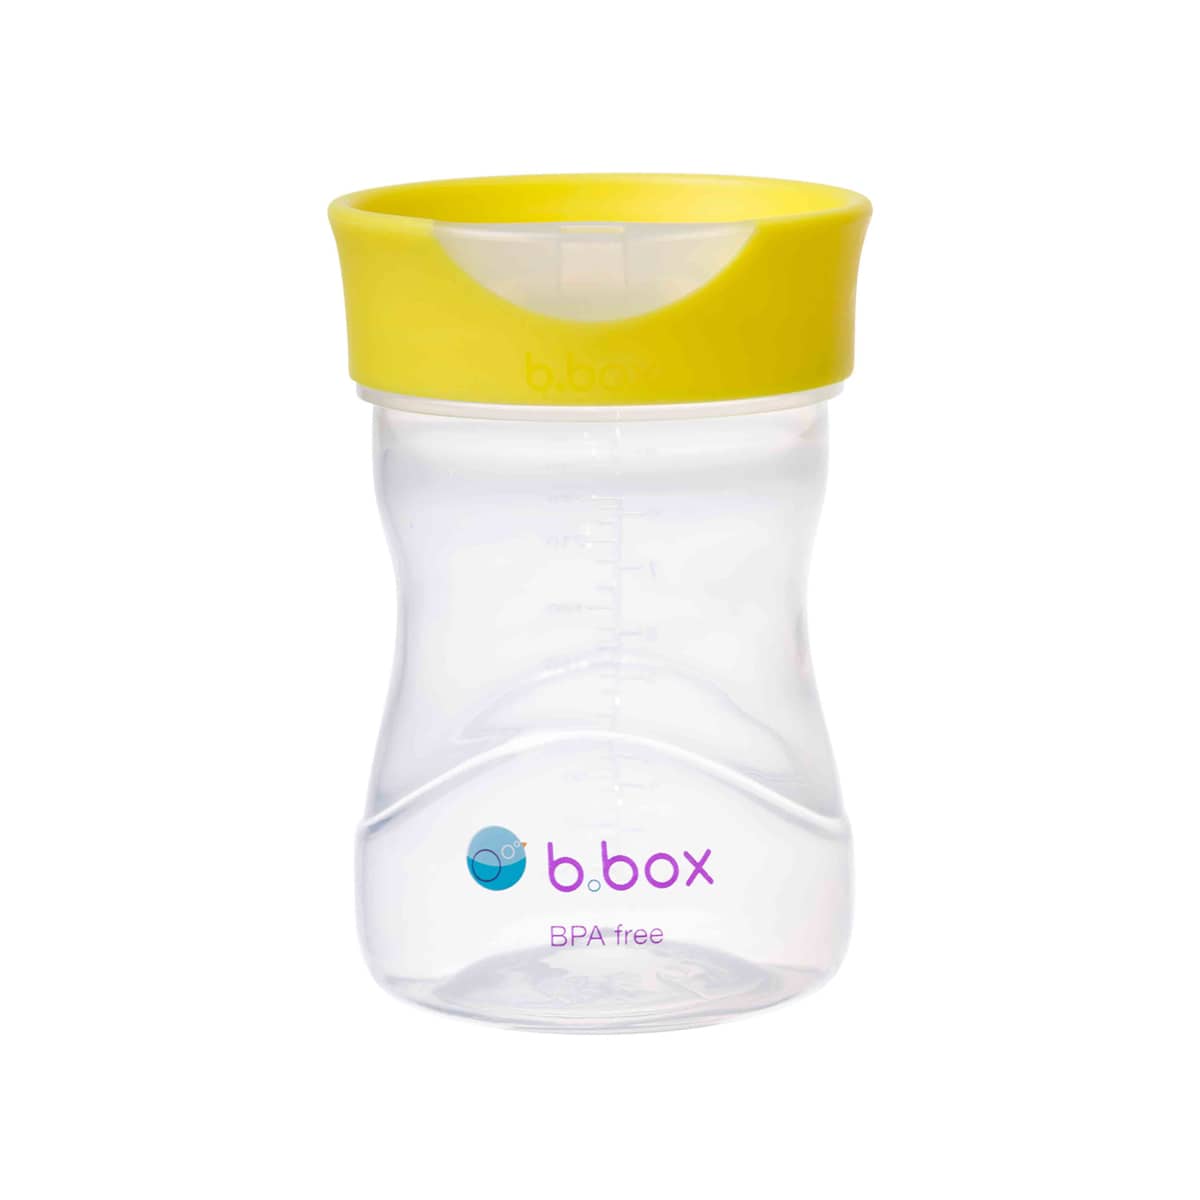 b.box Training Cup - Lemon